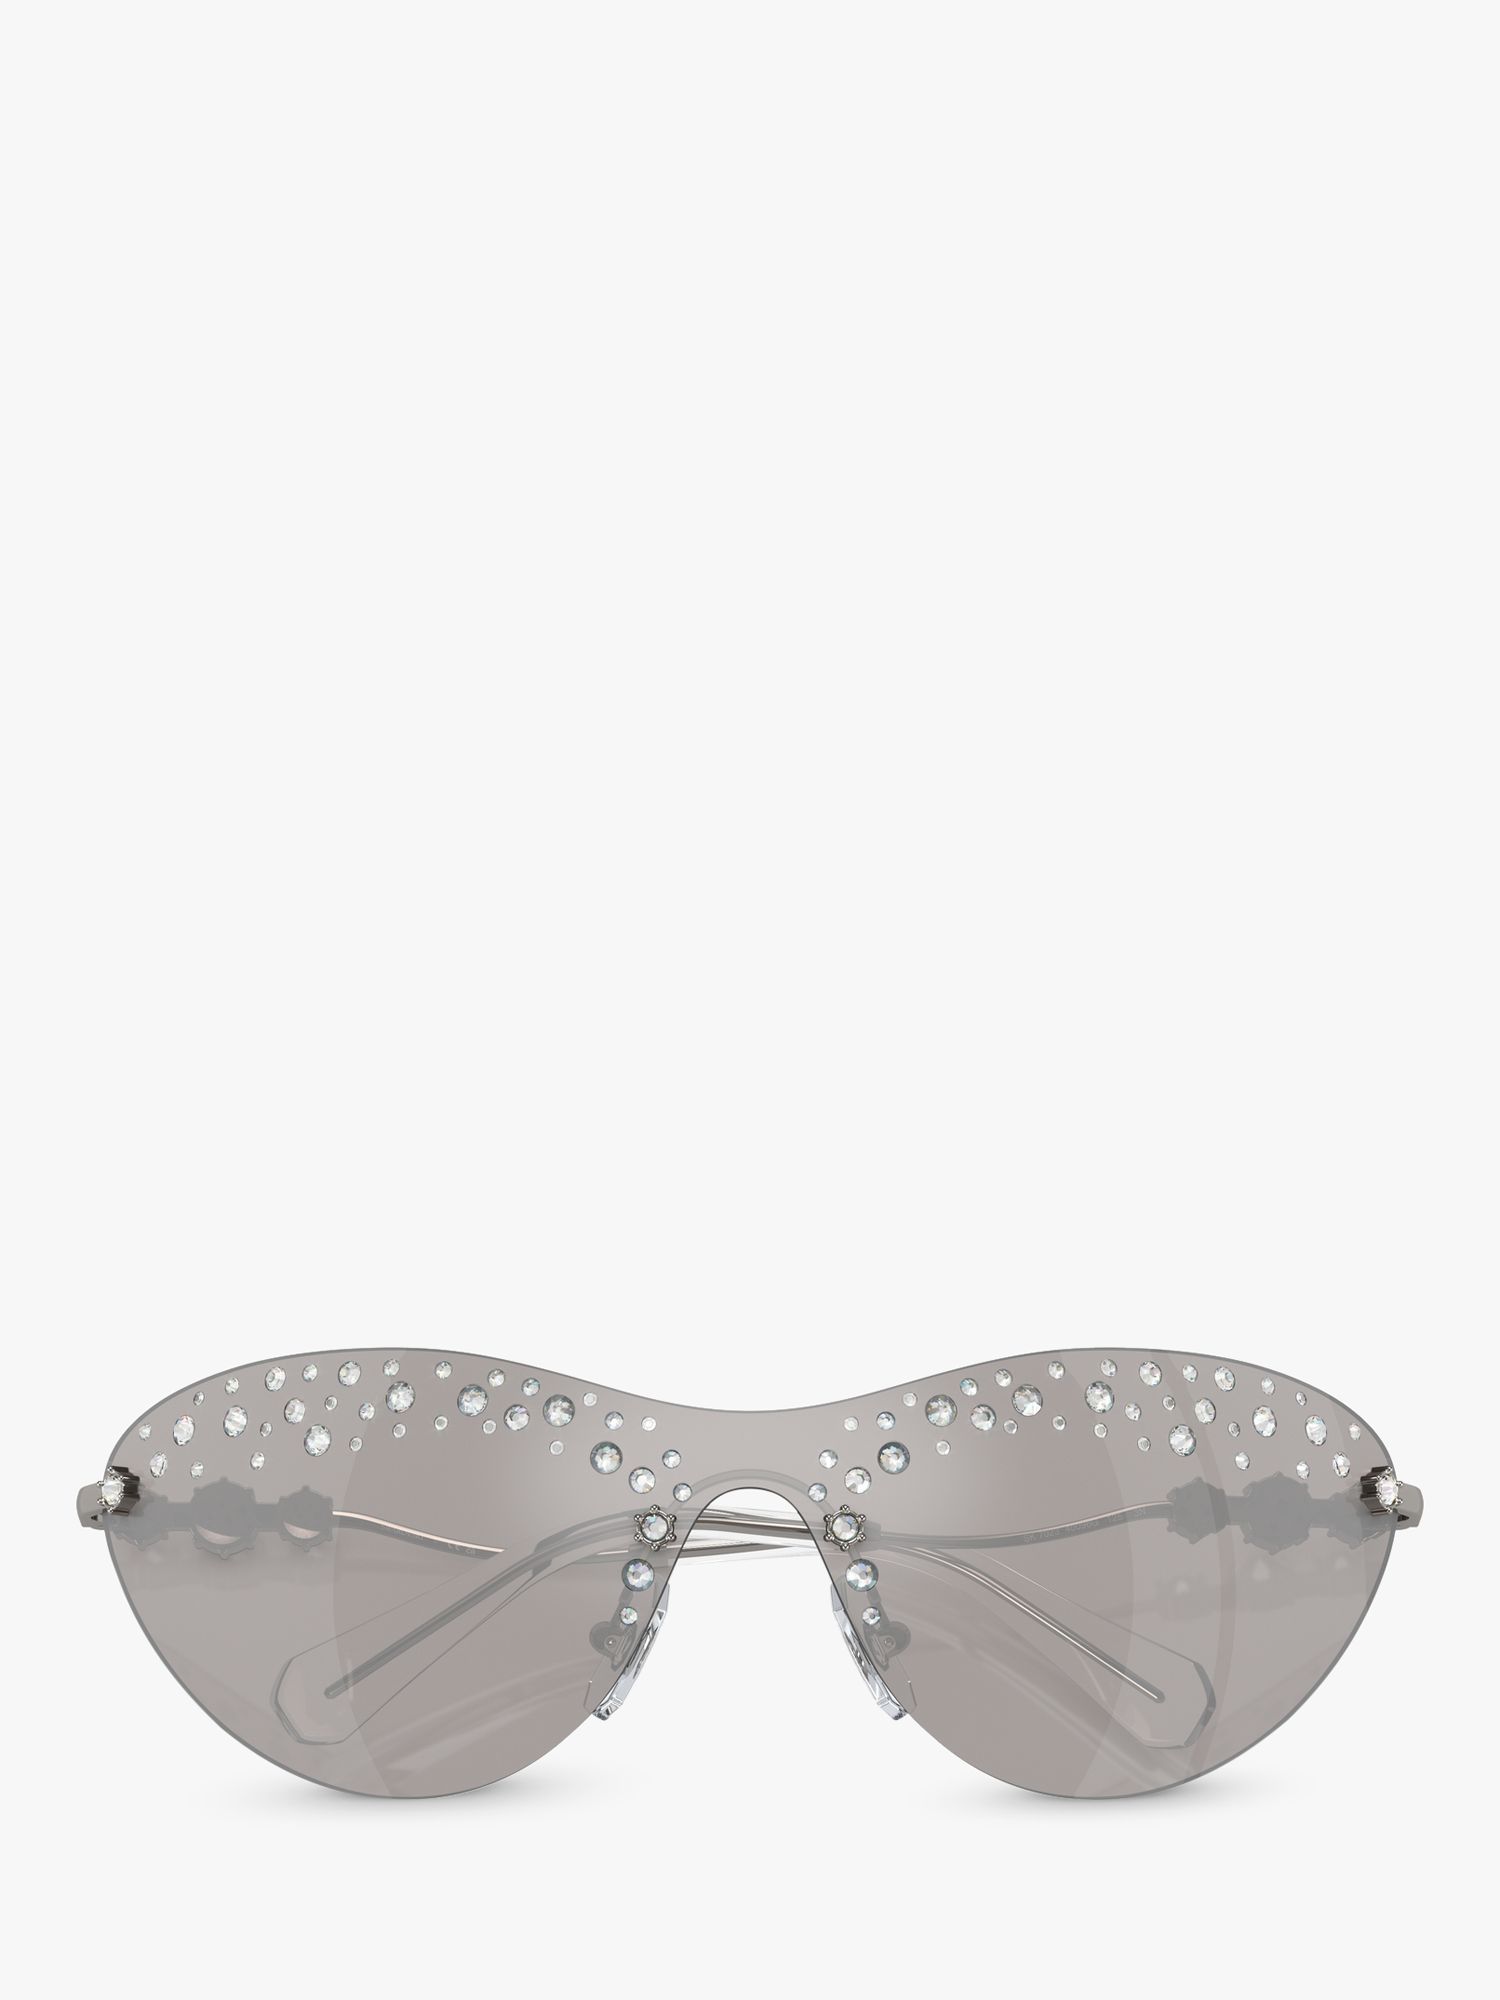 Swarovski SK7023 Women's Wrap Sunglasses, Gunmetal/Silver Mirror